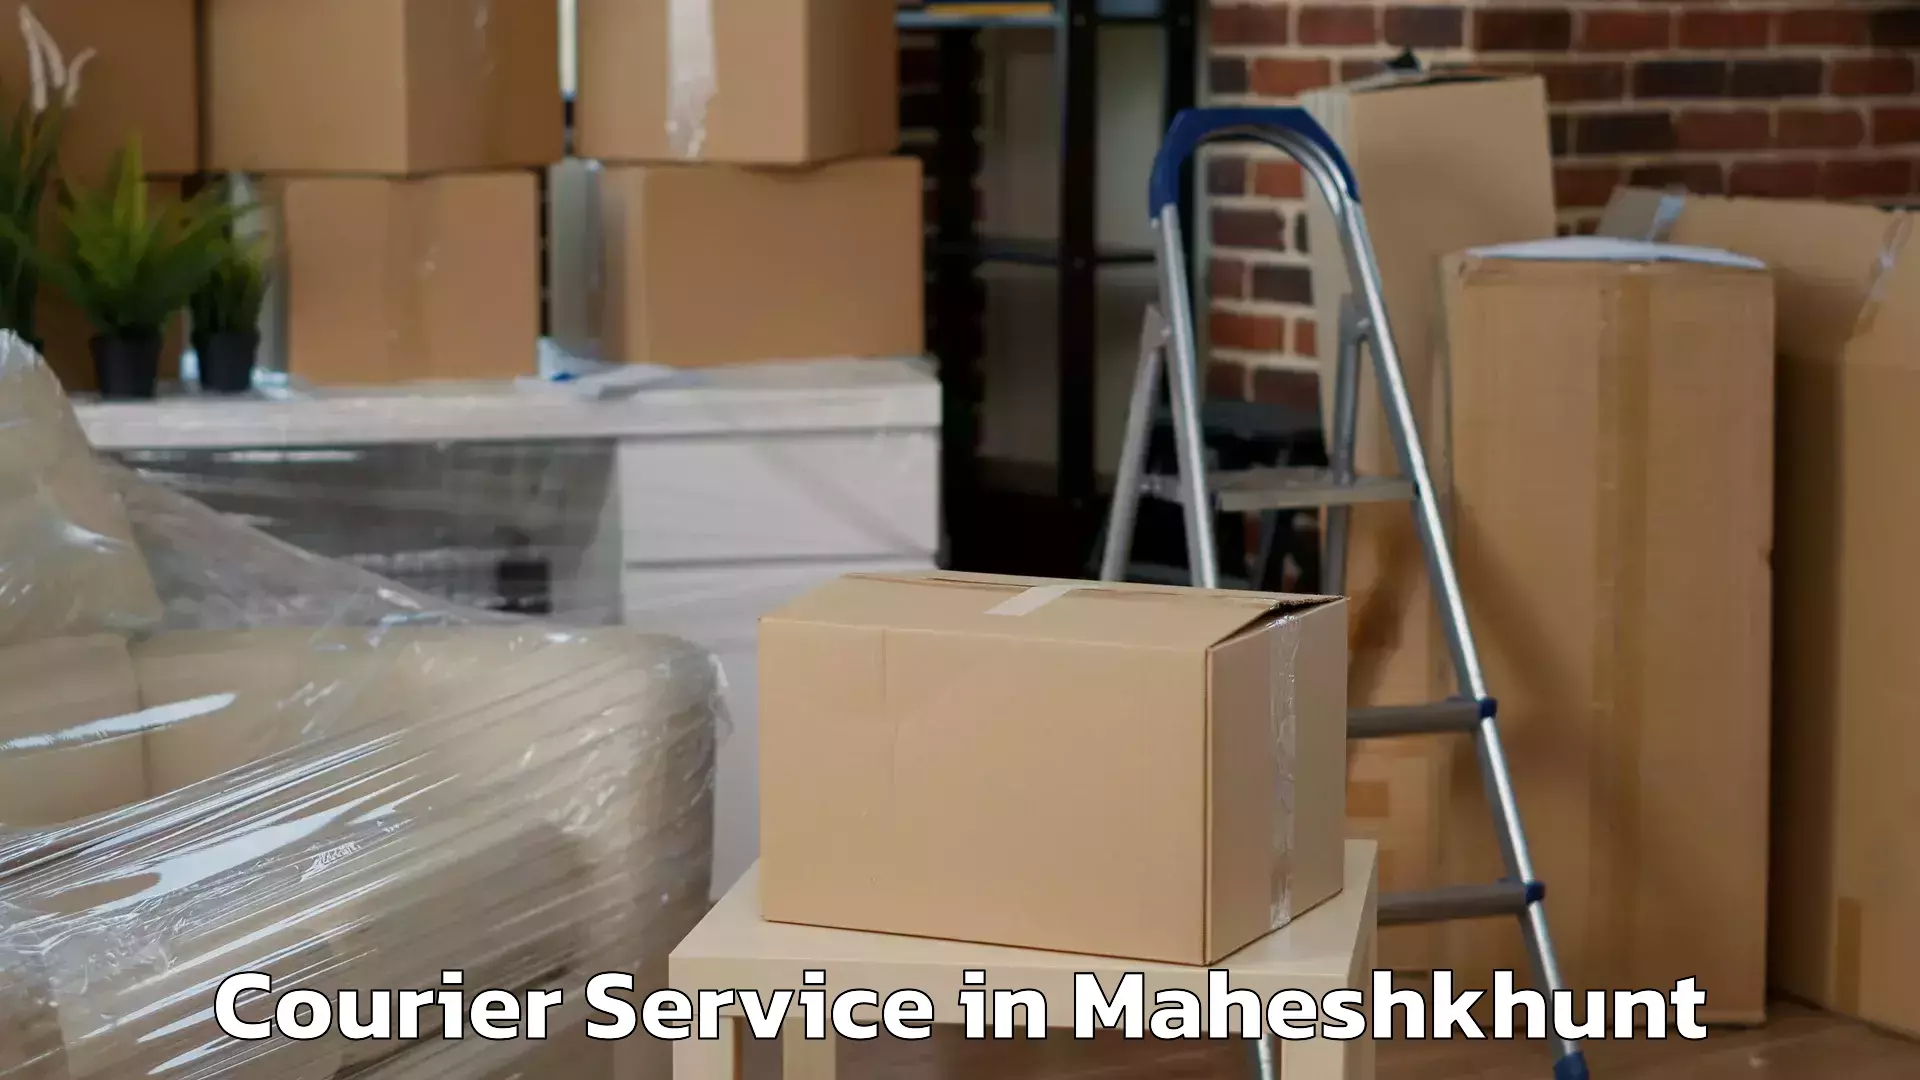 Efficient parcel delivery in Maheshkhunt